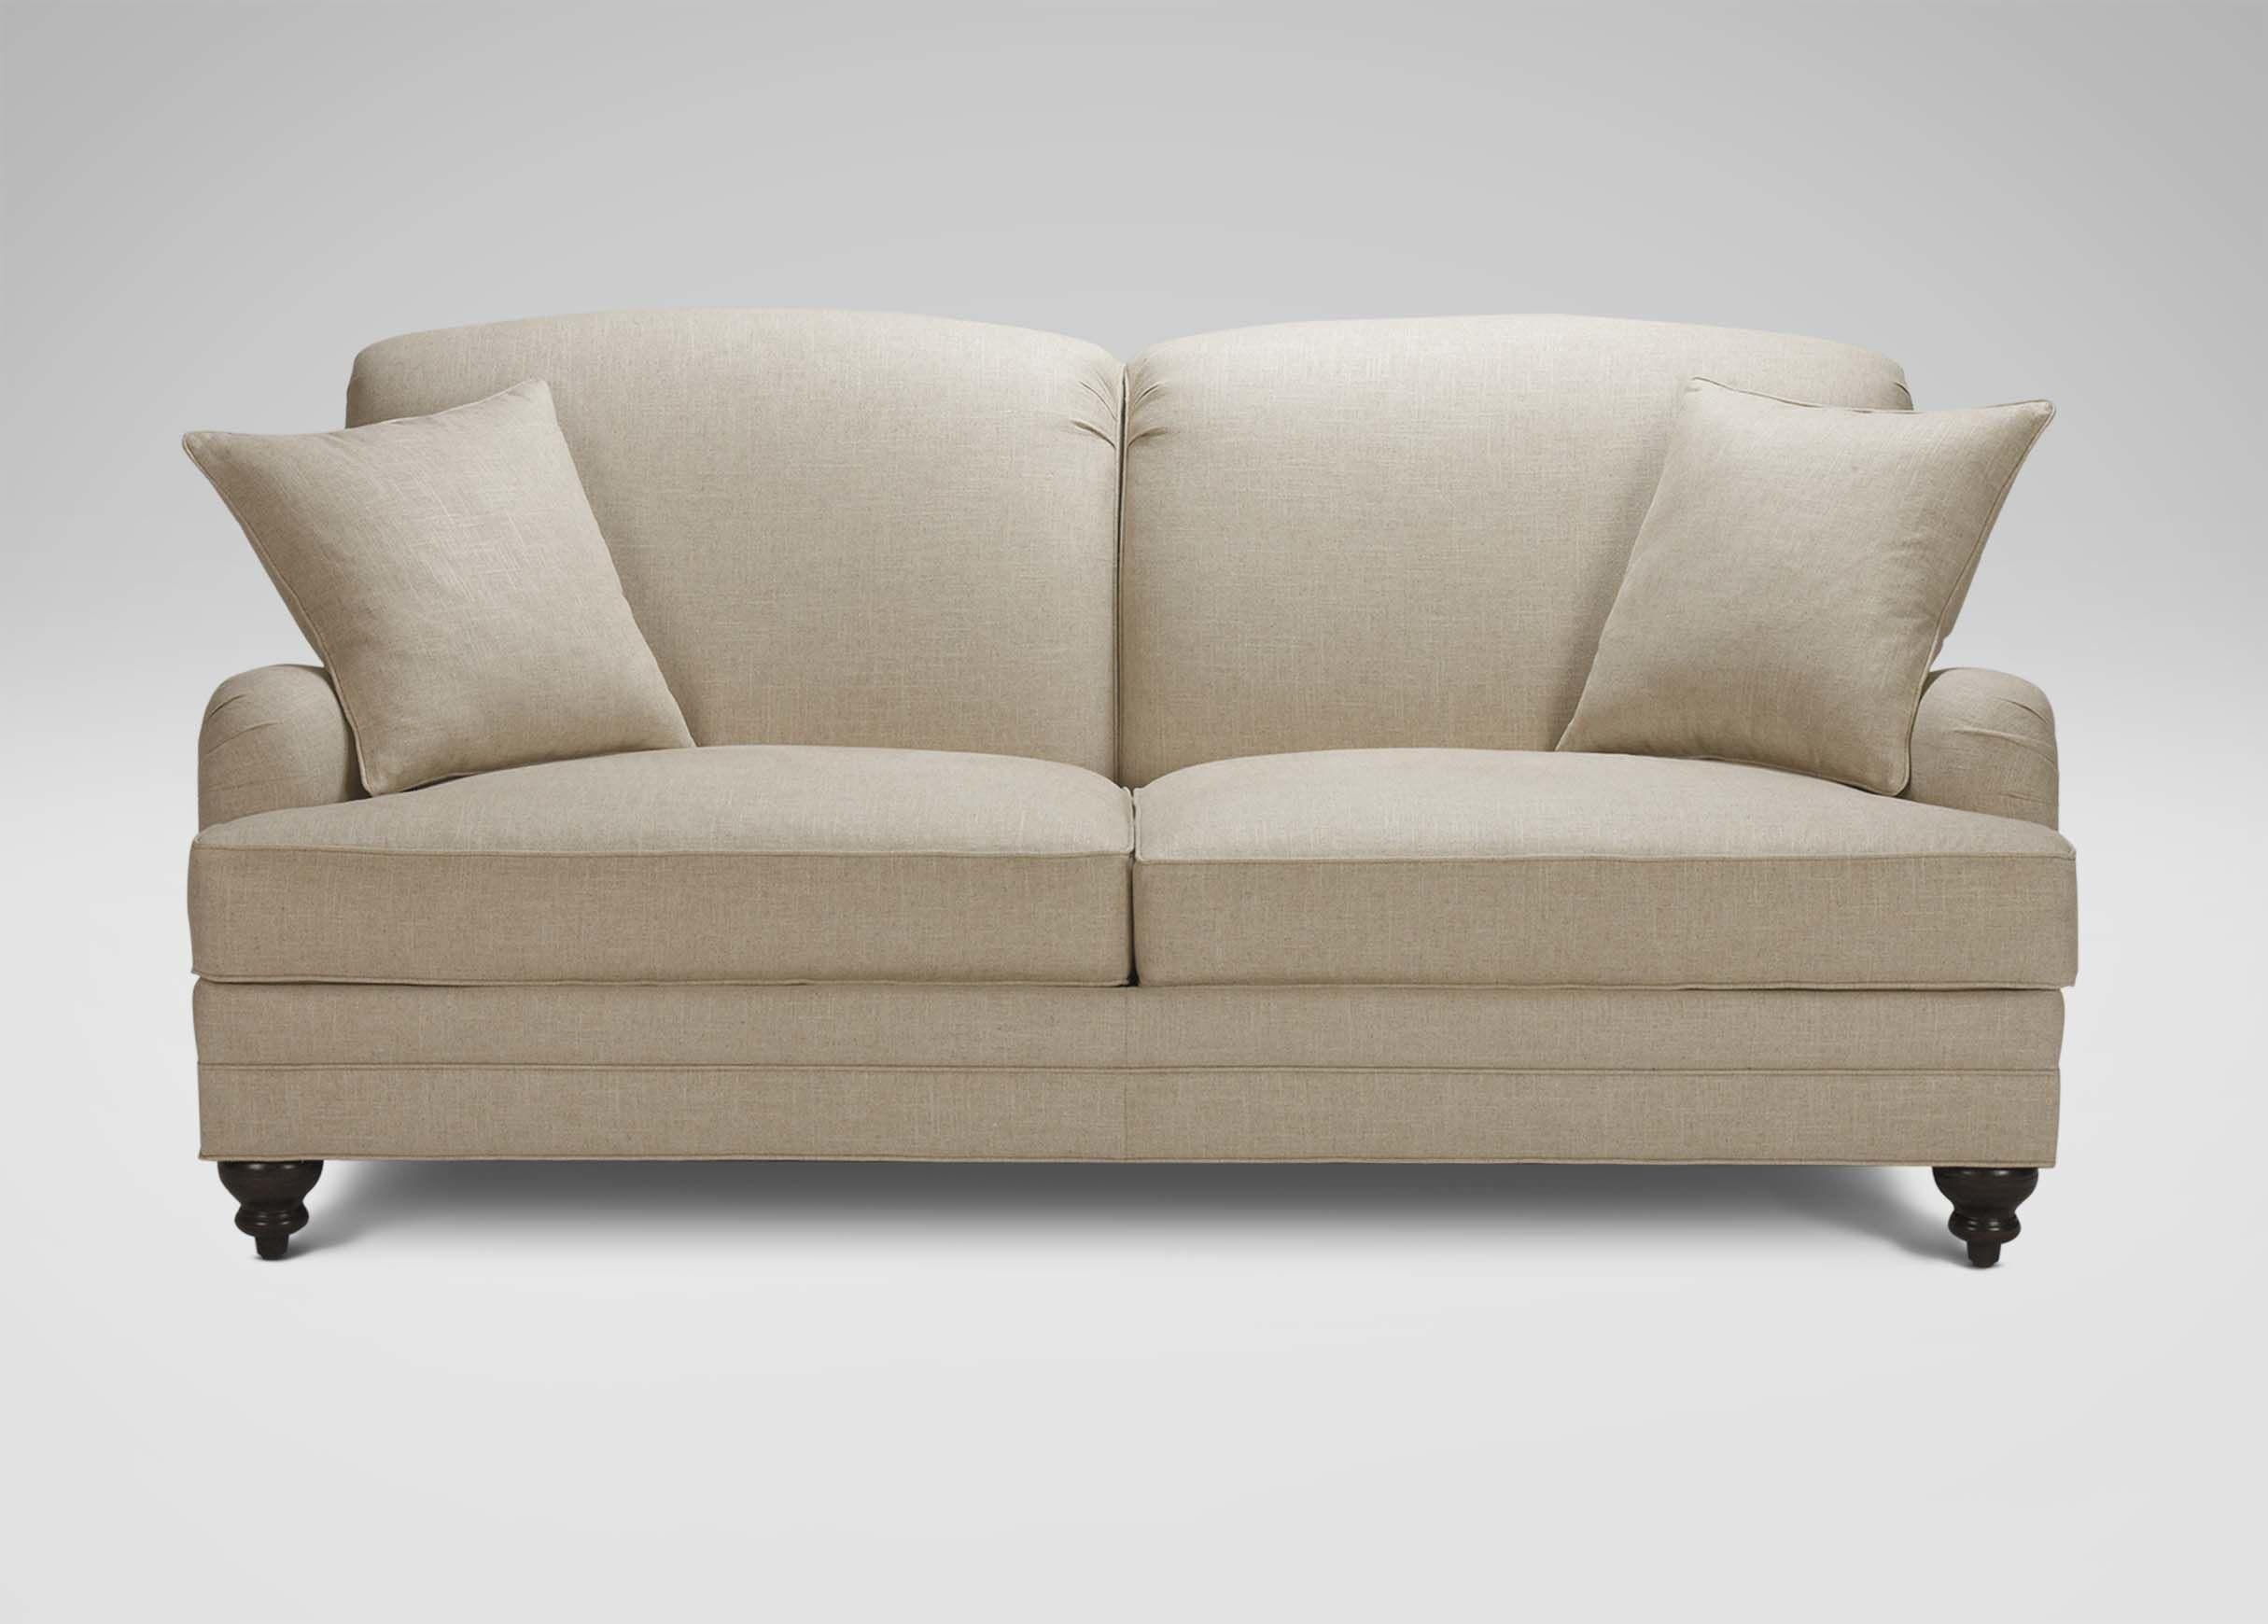 Sofas Center : Amazing Ethan Allen Sectional Sofas Leather White For Allen White Sofas (View 4 of 20)